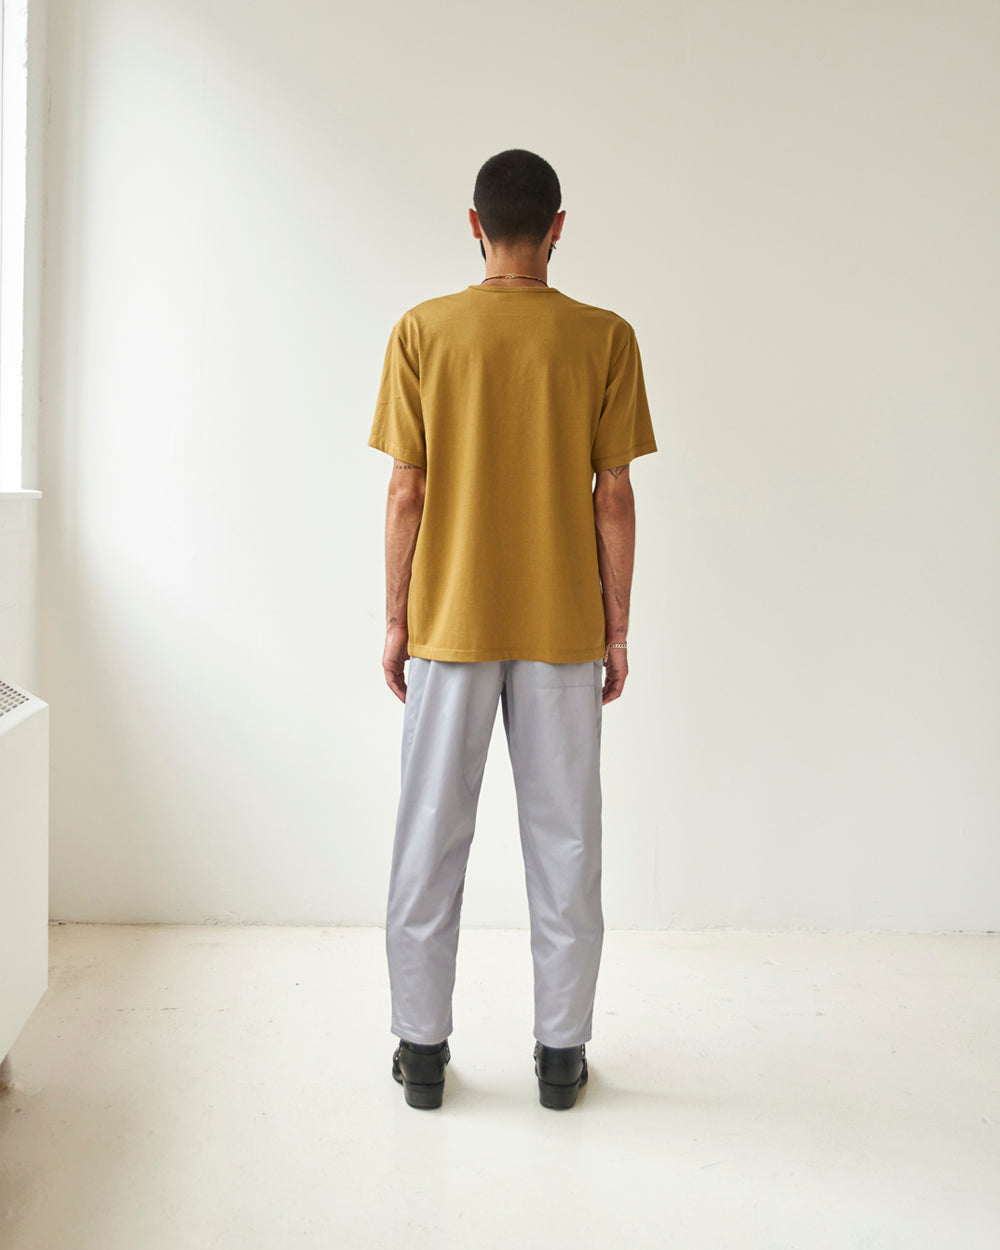 t-shirt olive unisex genderless elio veri montreal clothing